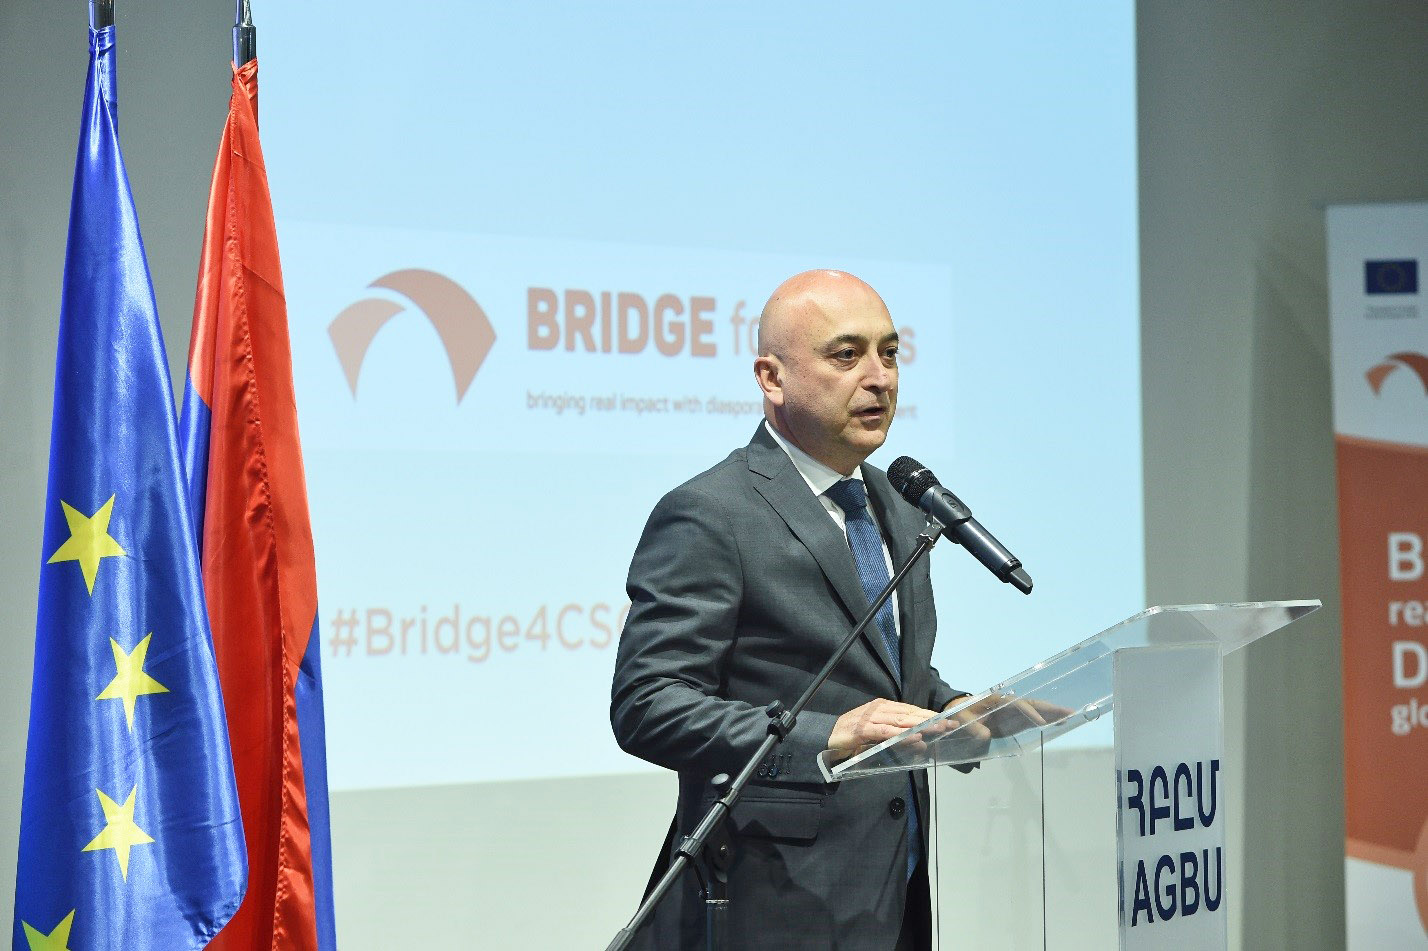 AGBU Armenia launches EU-funded BRIDGE4CSOs program